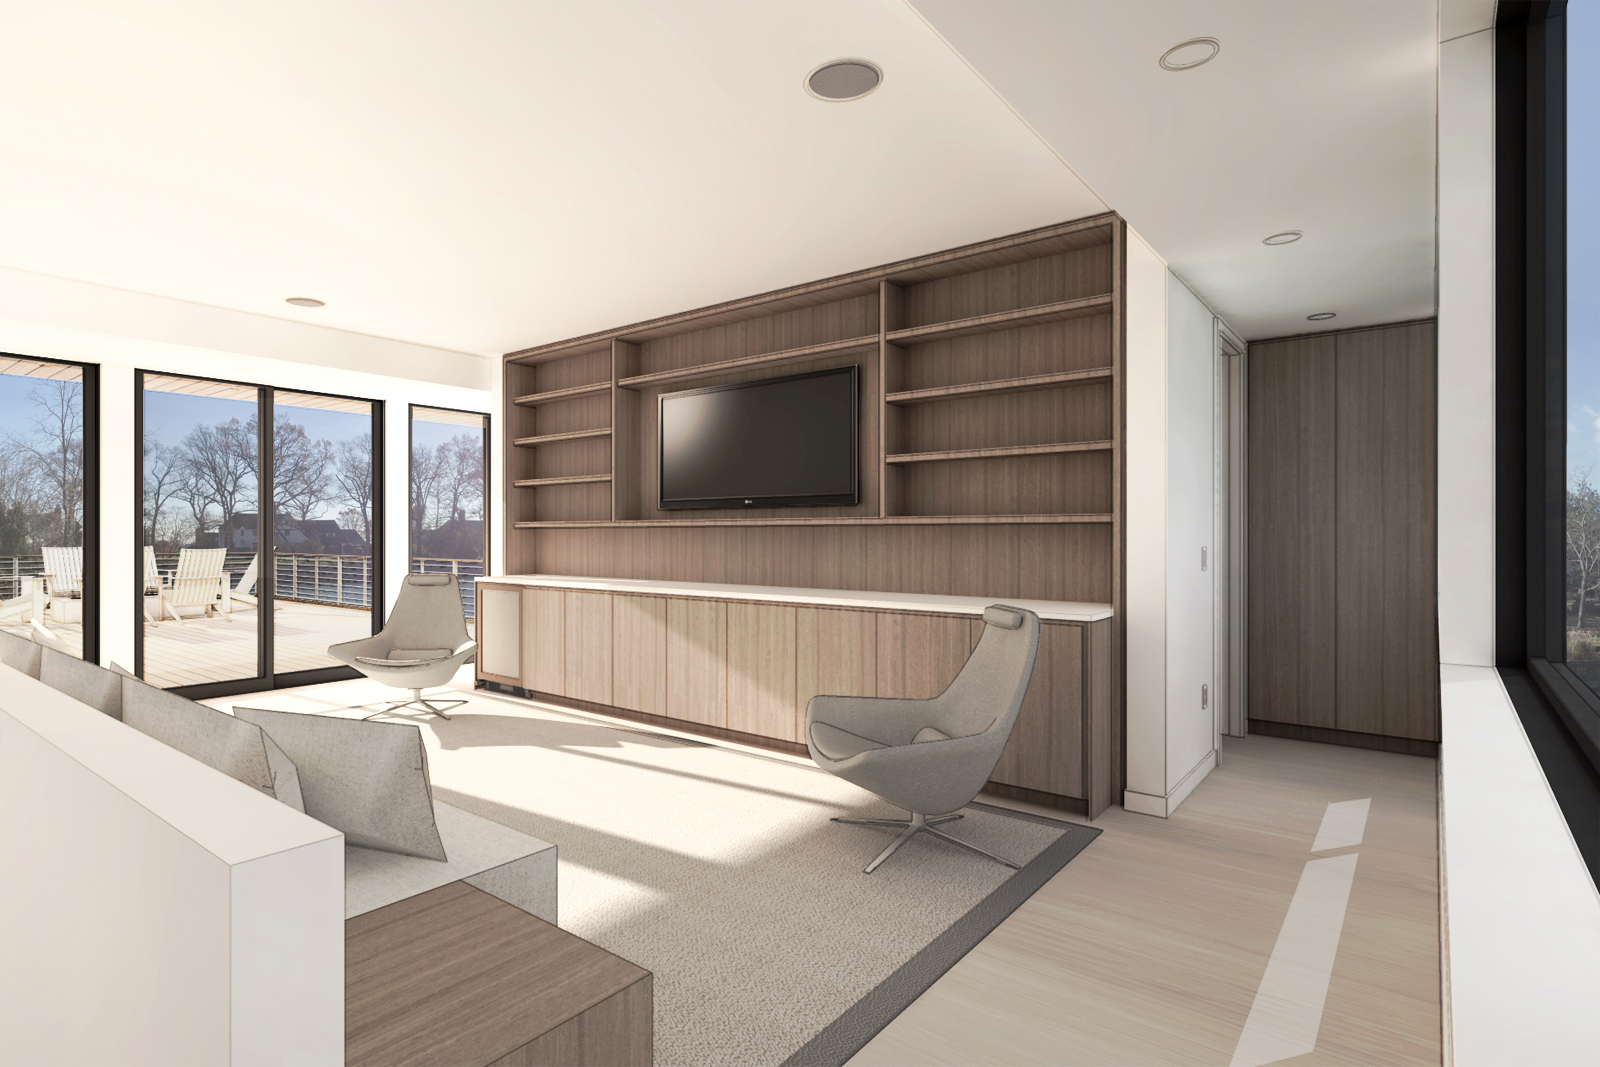 05-res4-resolution-4-architecture-modern-modular-prefab-douglas-lane-house-interior-living-hallway-rendering.jpg